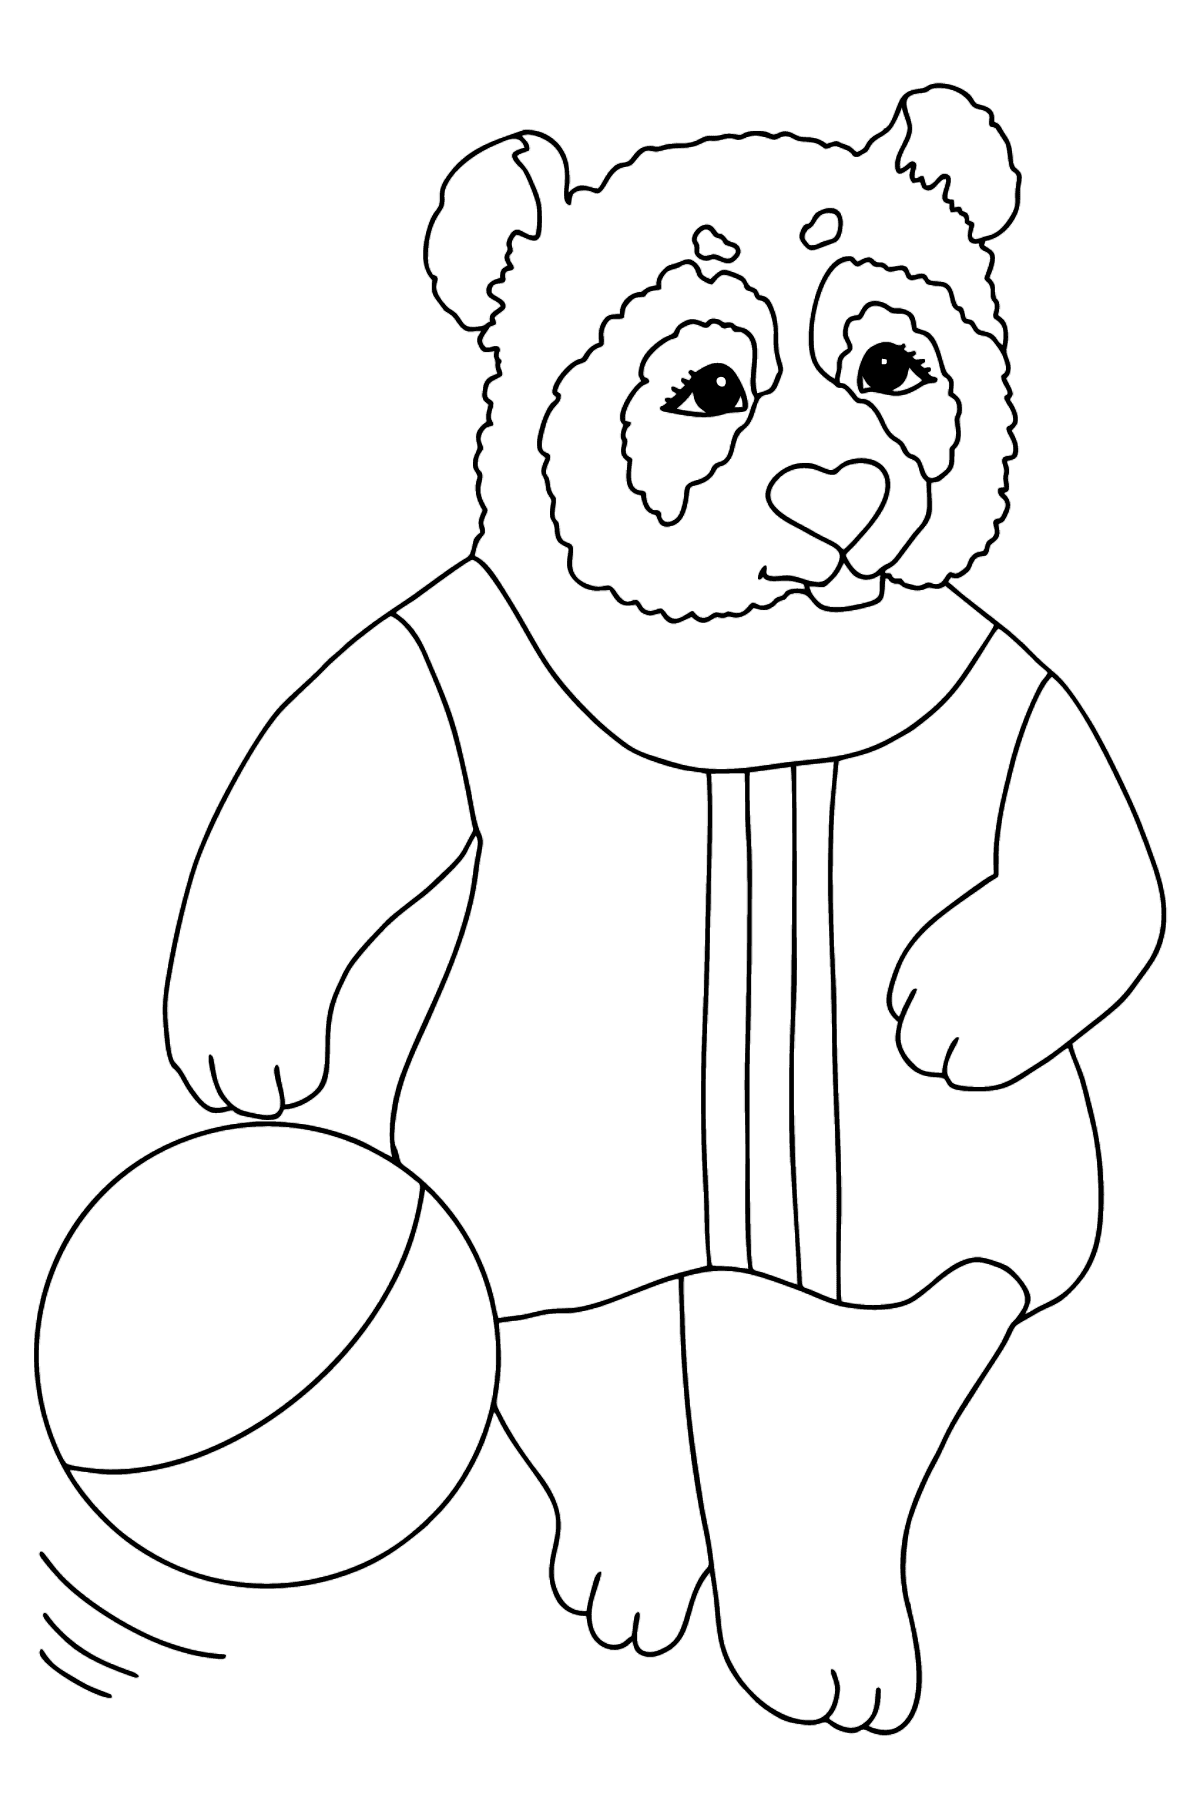 Dibujo de Panda Para Bebés (Difícil) para colorear - Dibujos para Colorear para Niños